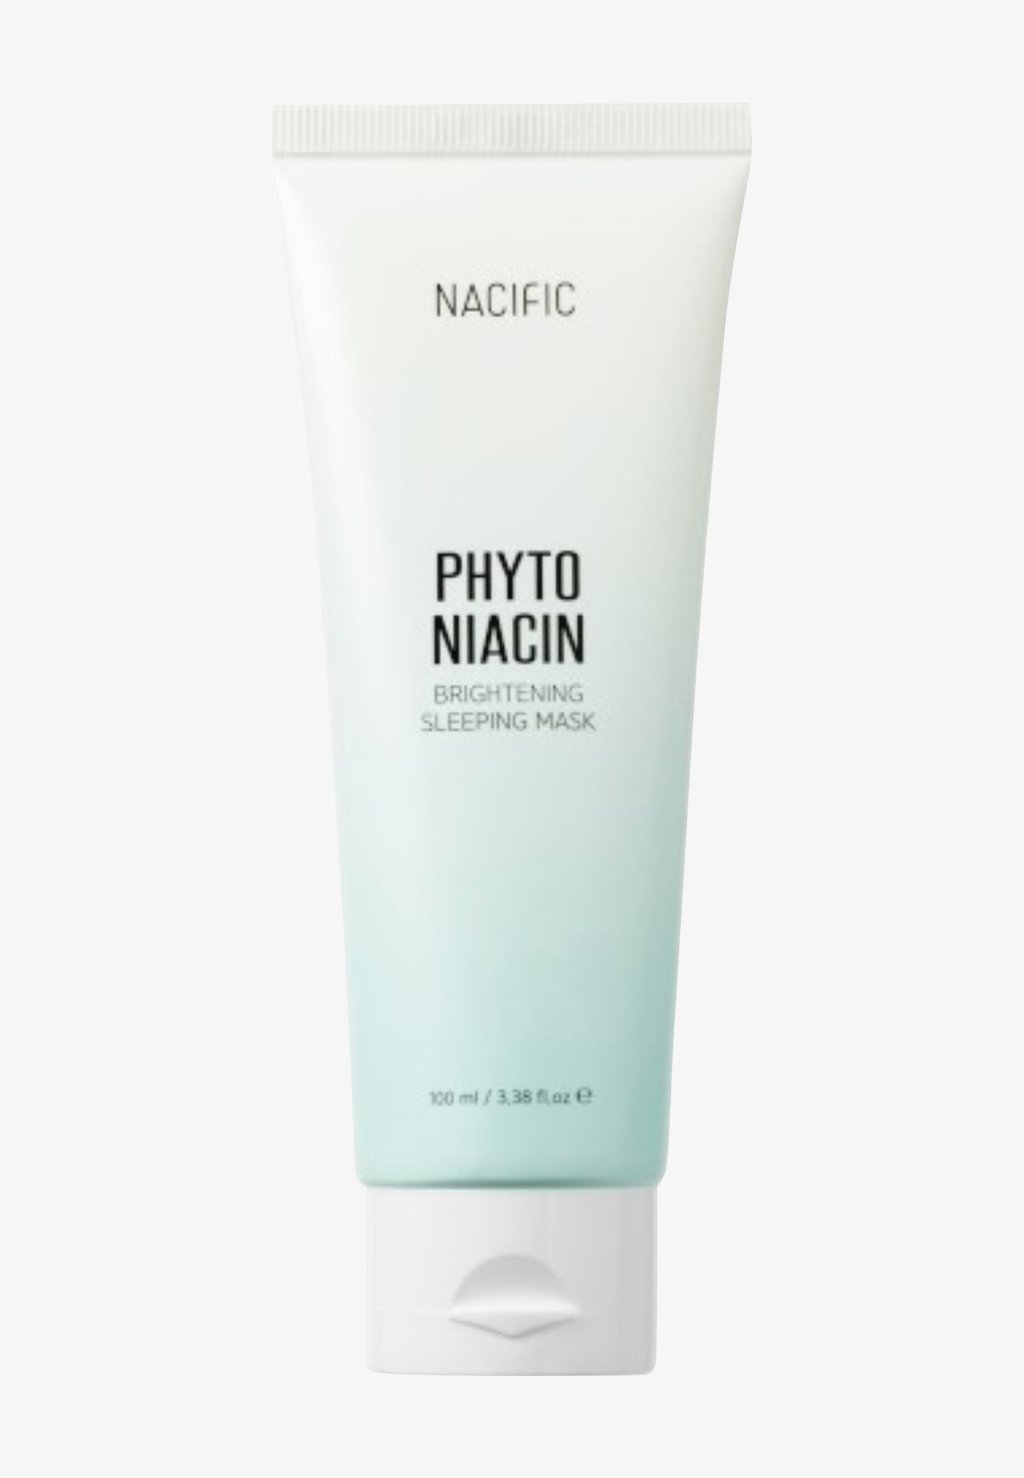 цена Дневной крем Phyto Niacin Brightening Sleeping Mask NACIFIC